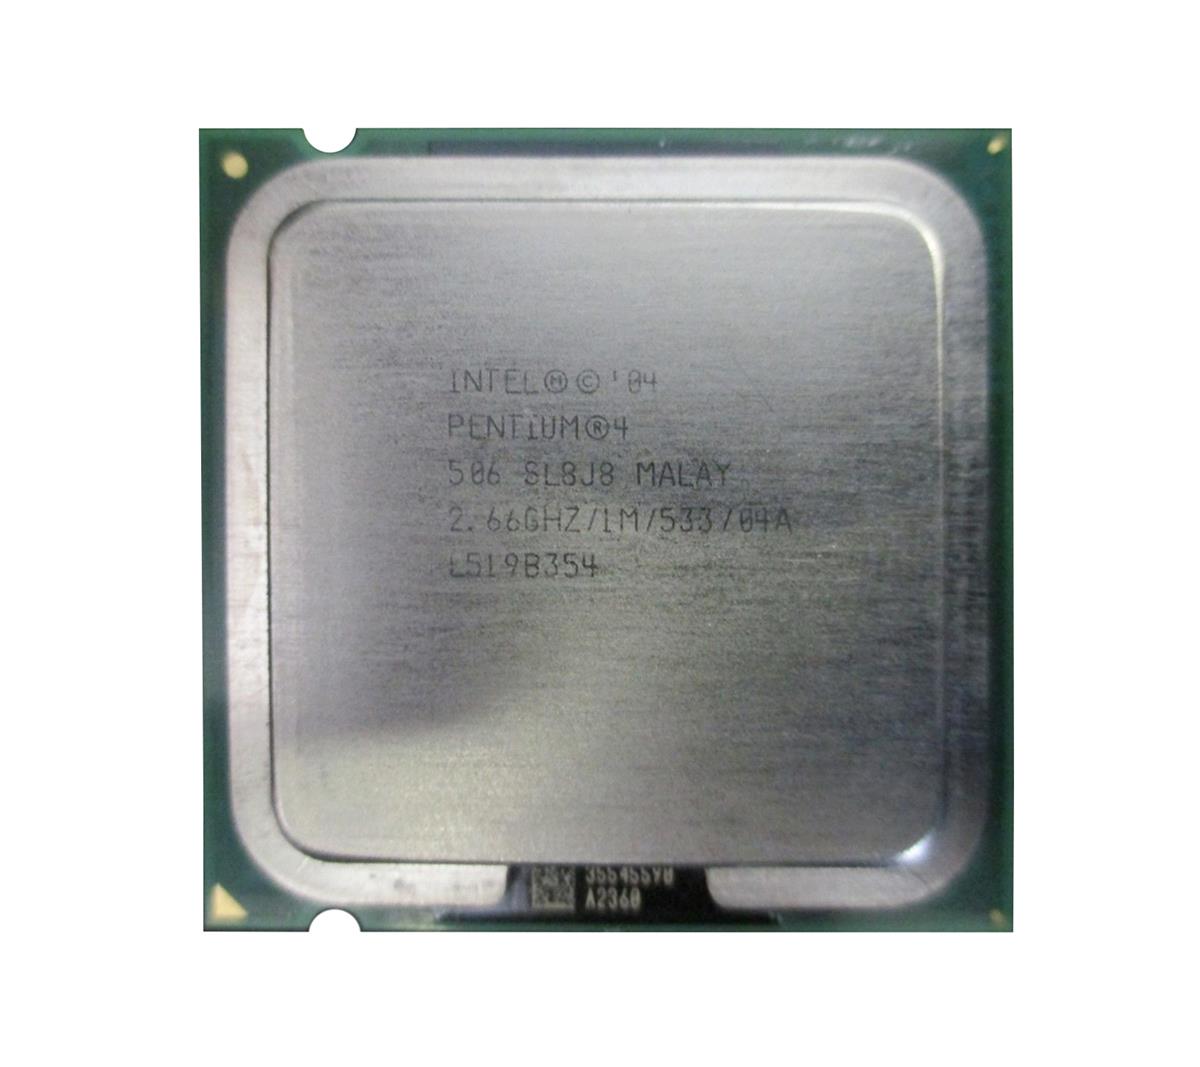 41D1029 Lenovo 2.66GHz 533MHz FSB 1MB L2 Cache Intel Pentium 4 506 Desktop Processor Upgrade